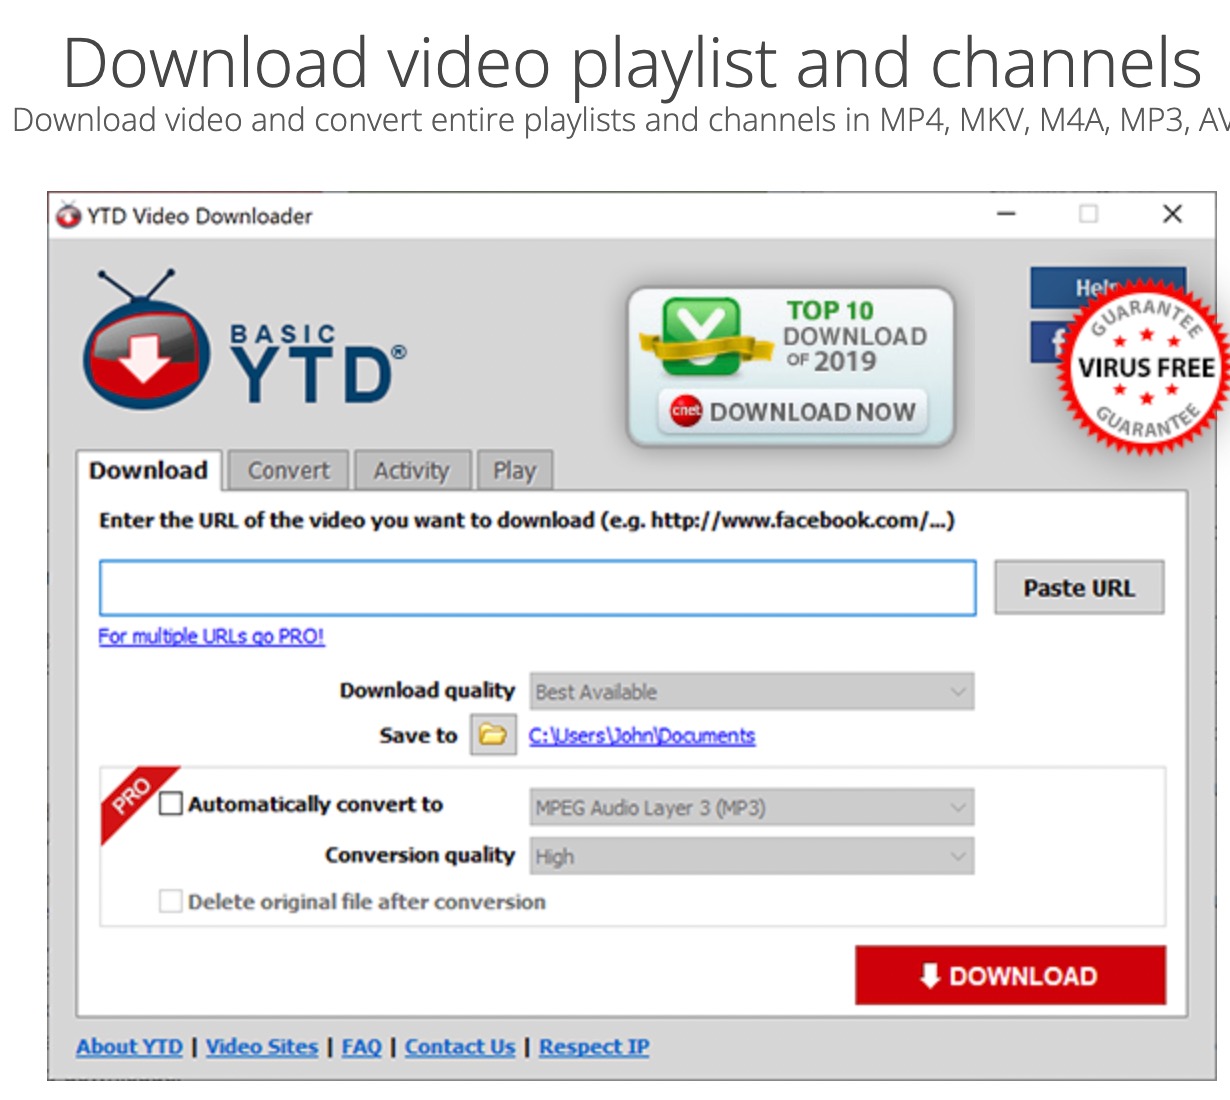 YTD Video Downloader